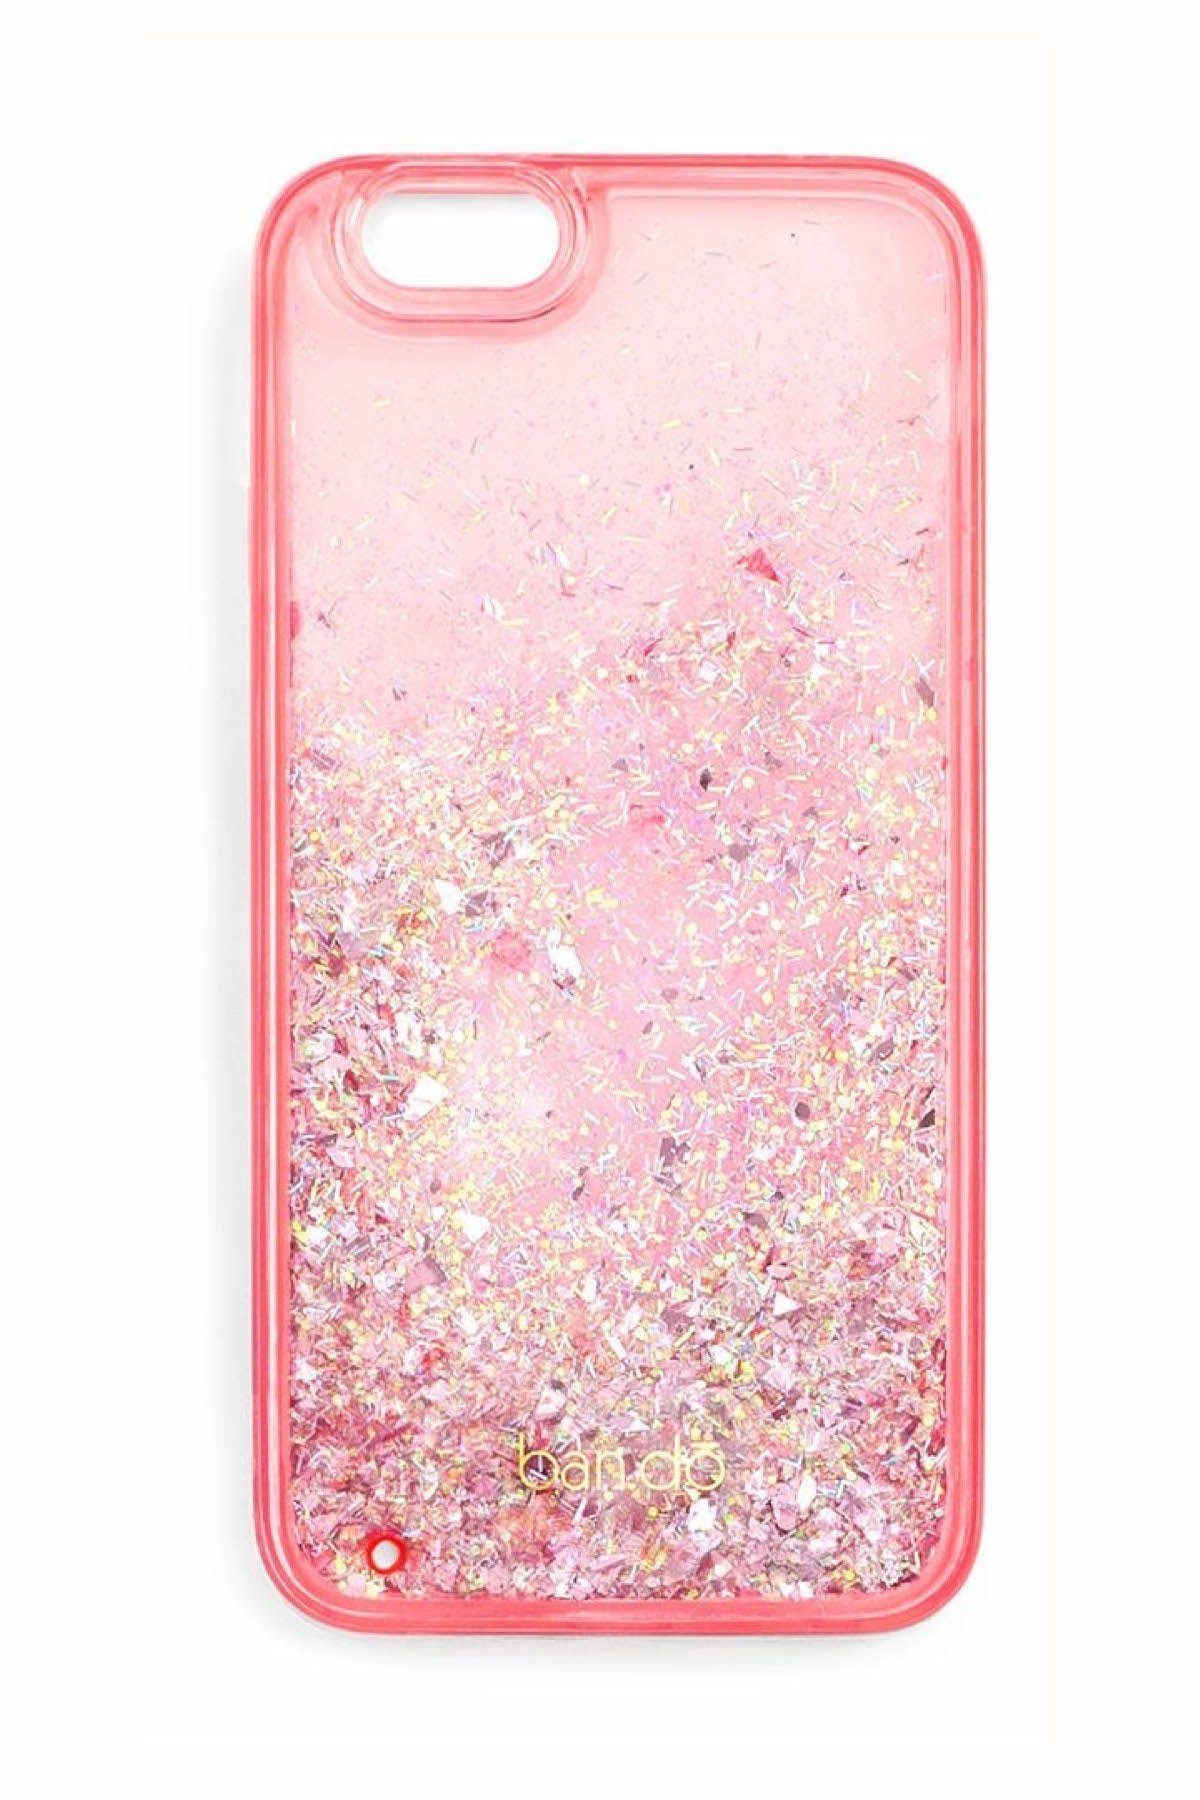 Ban.do Pink Glitter Bomb iPhone Case